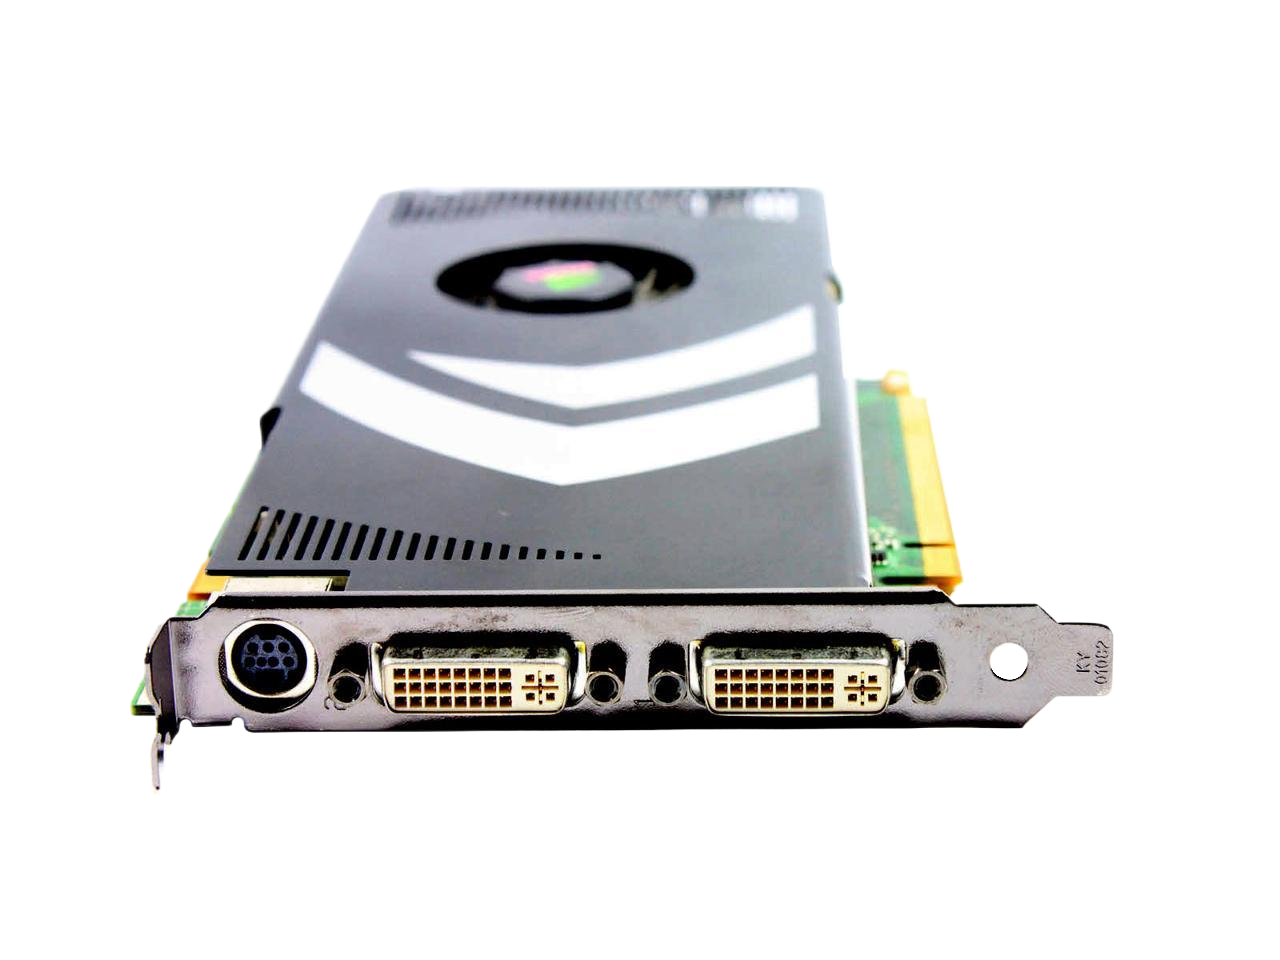 NVIDIA GeForce 8800 GT 512MB GDDR3 SDRAM 2560x1600 PCI Express 2.0 x16 Dual DVI Interface Graphic Card CP187